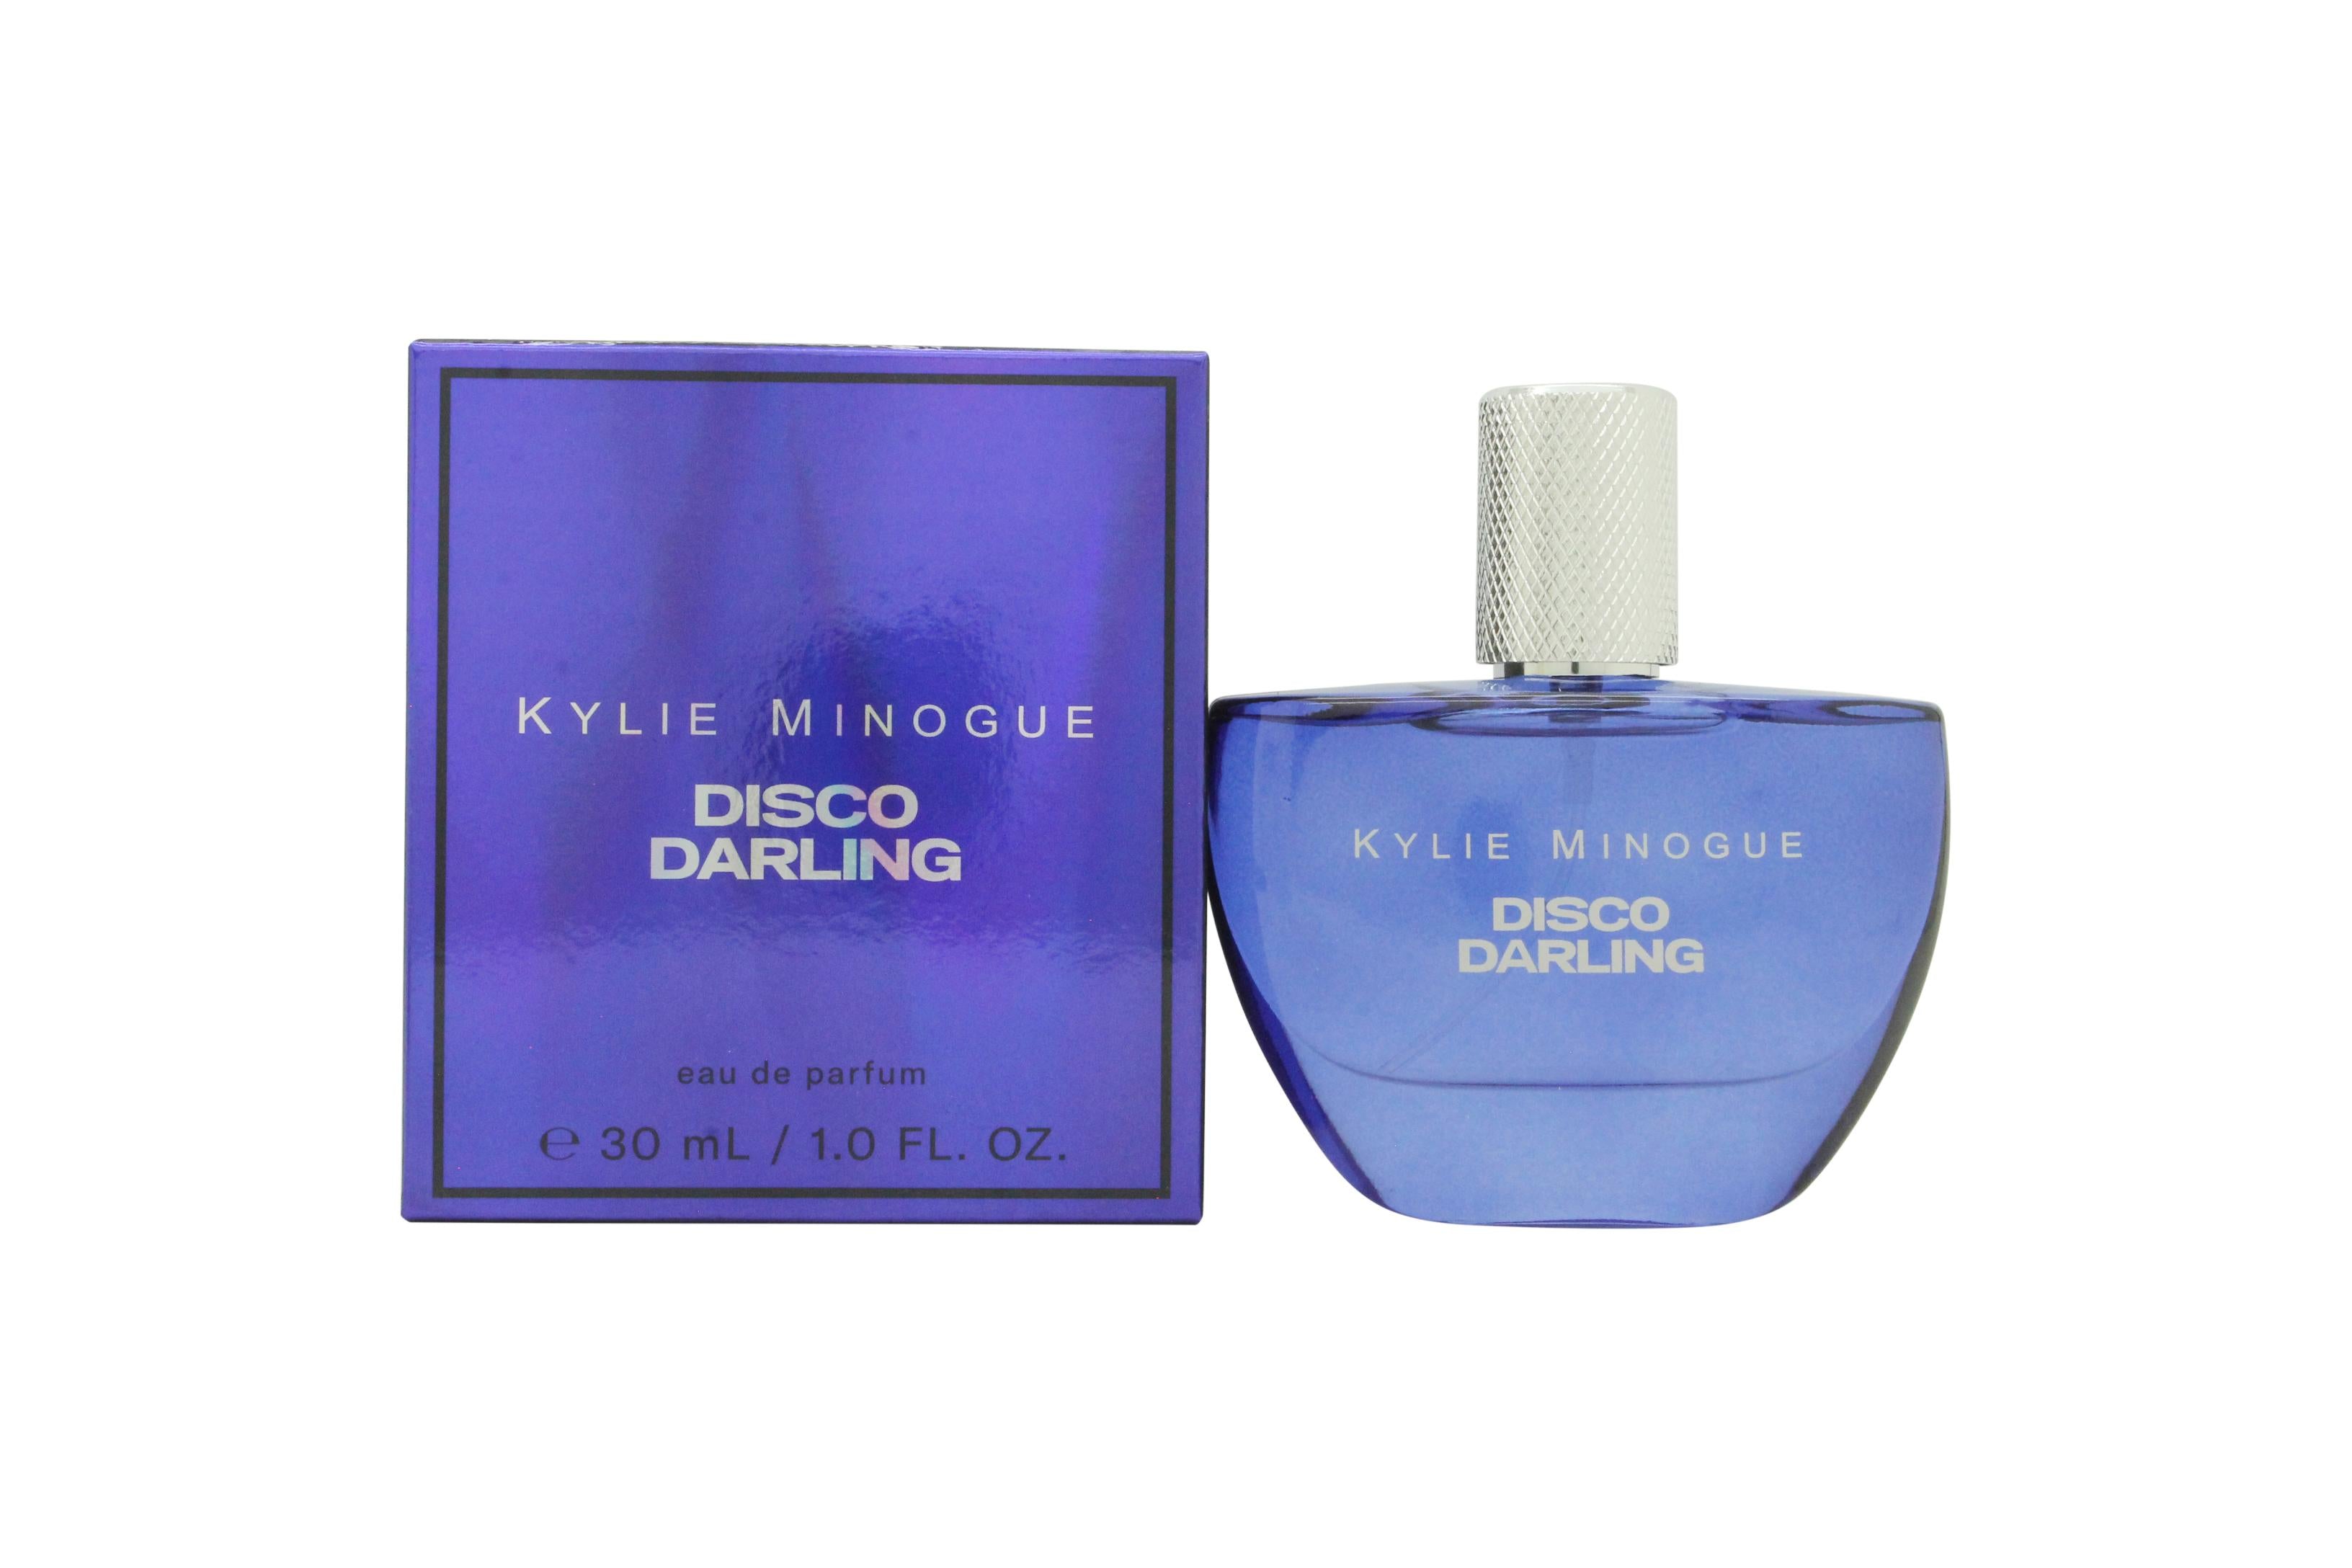 View Kylie Minogue Disco Darling Eau de Parfum 30ml Spray information